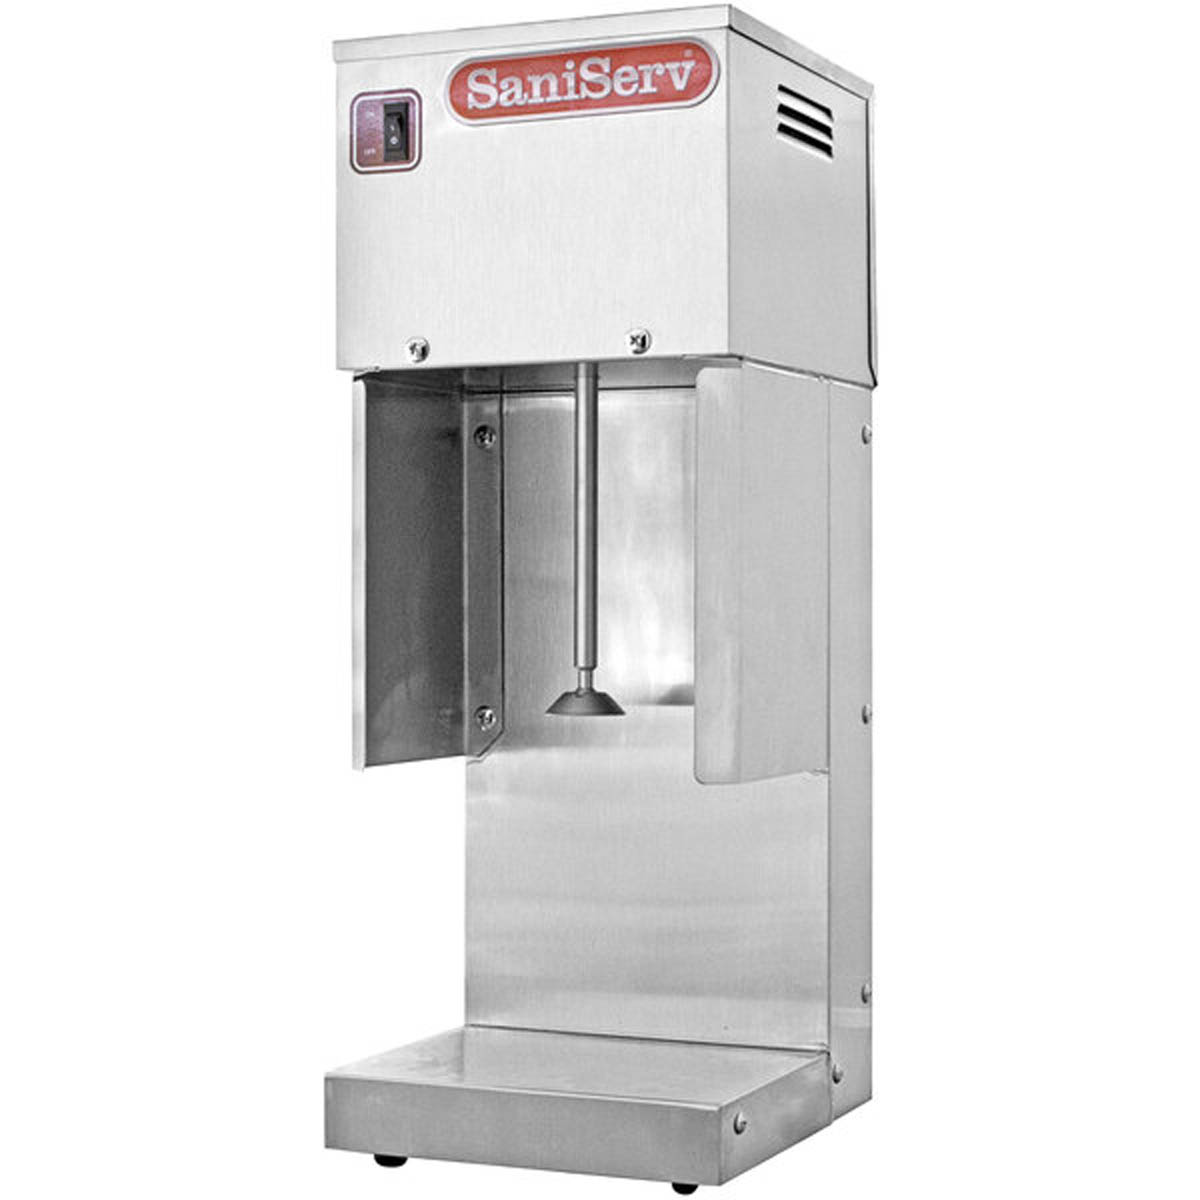 SaniServ Milkshake Machines